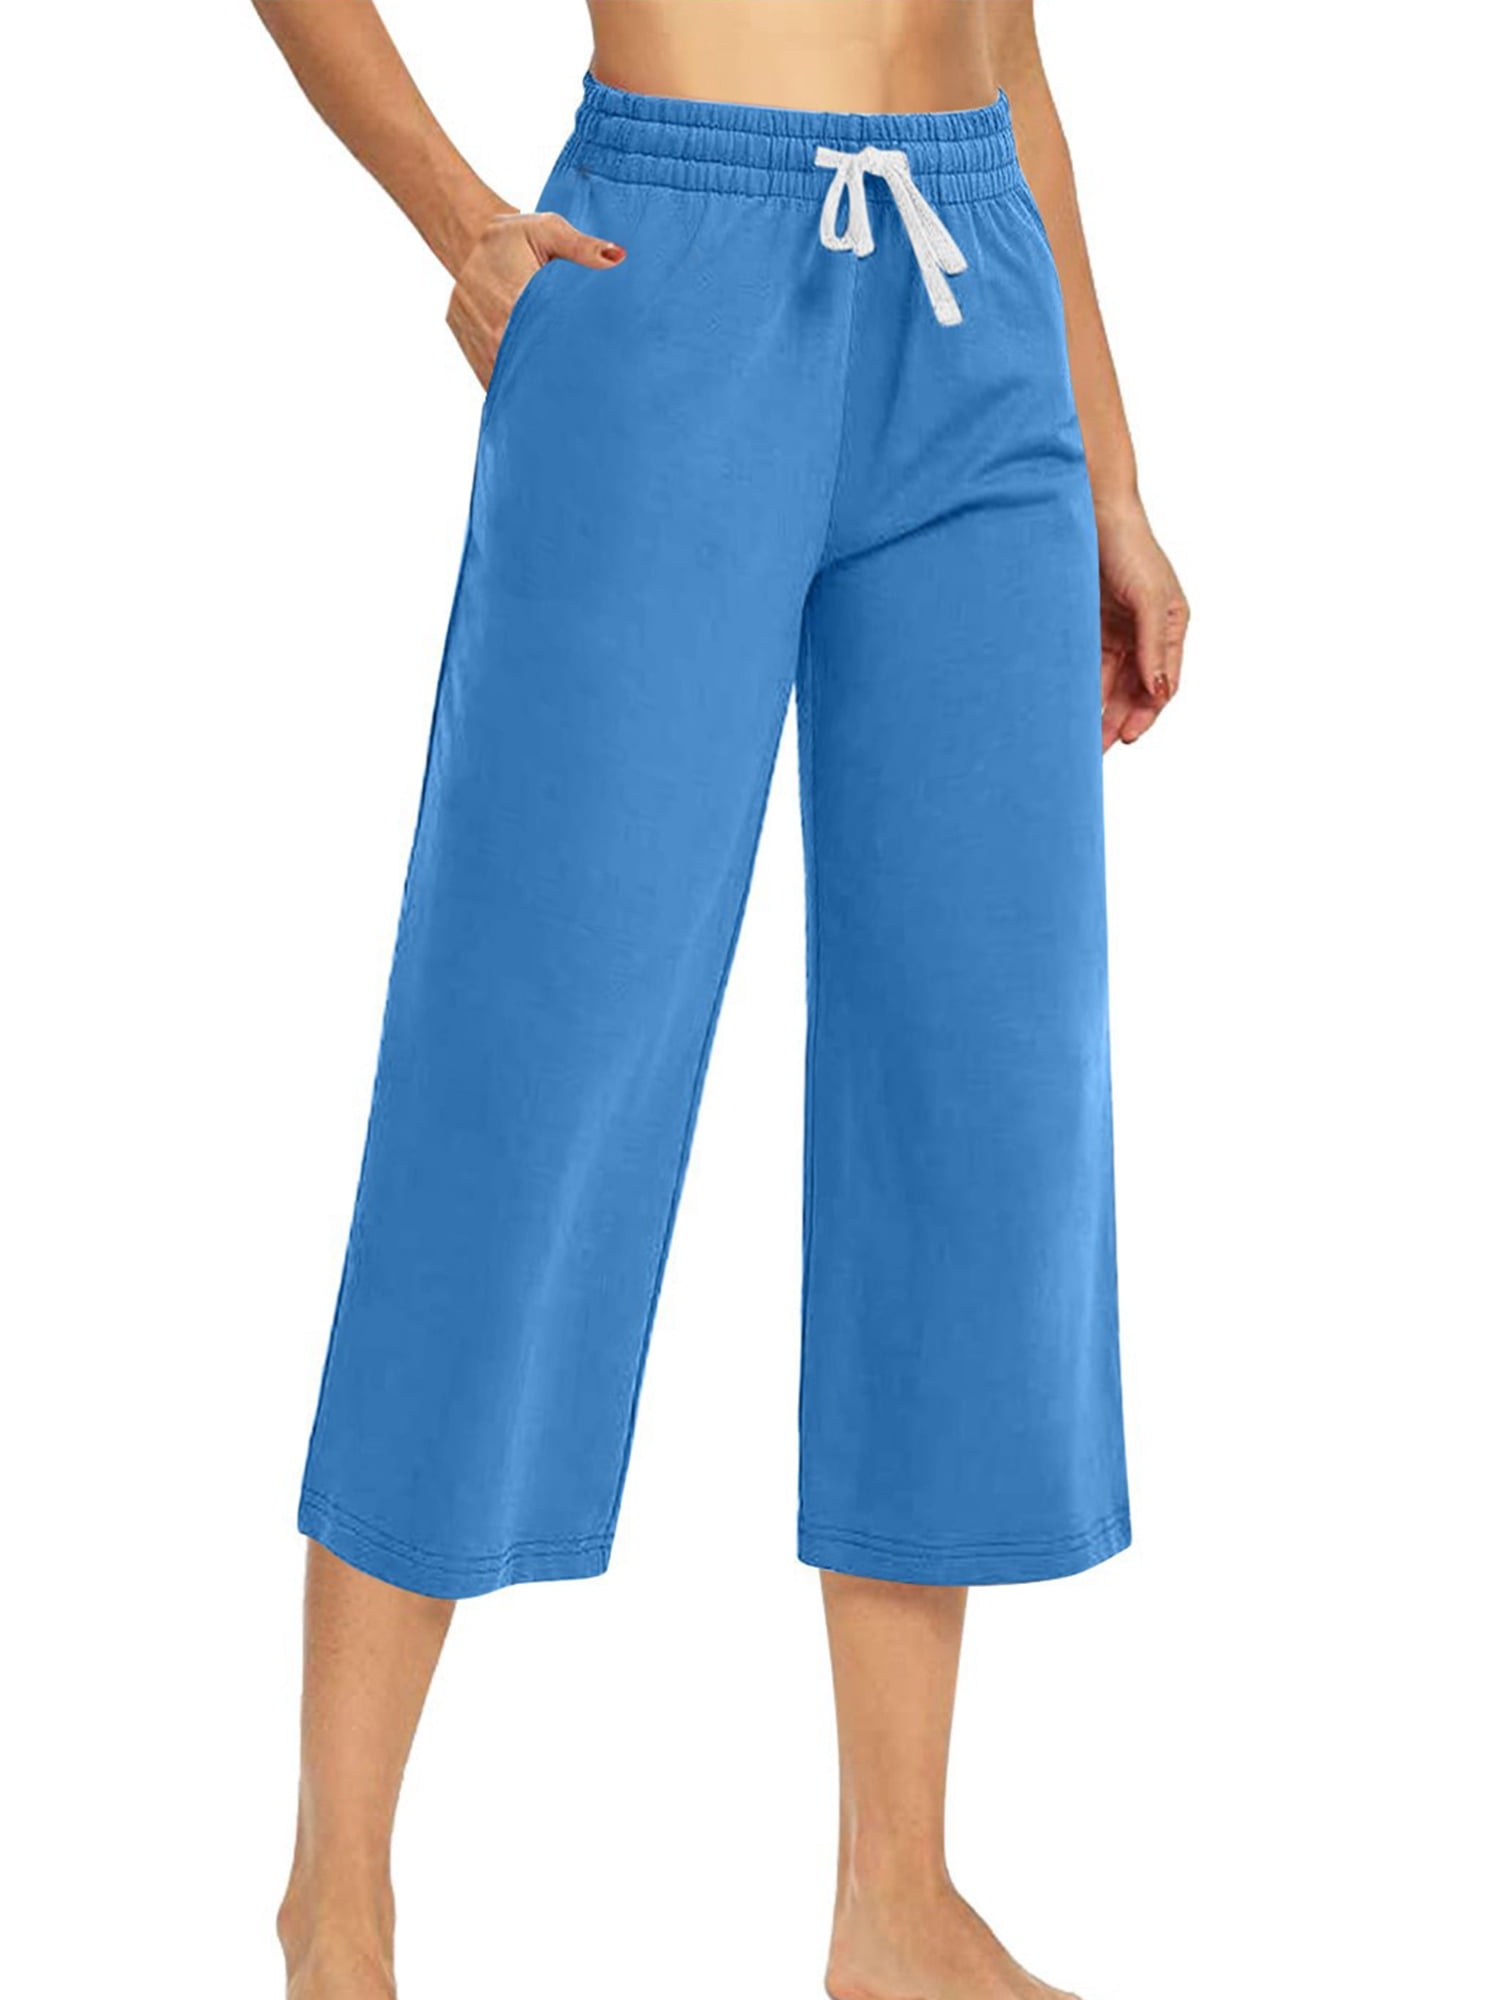 Niuer Women Casual Lounge Crop Pant Pocket Comfy Pajamas Sleepwear Pj ...